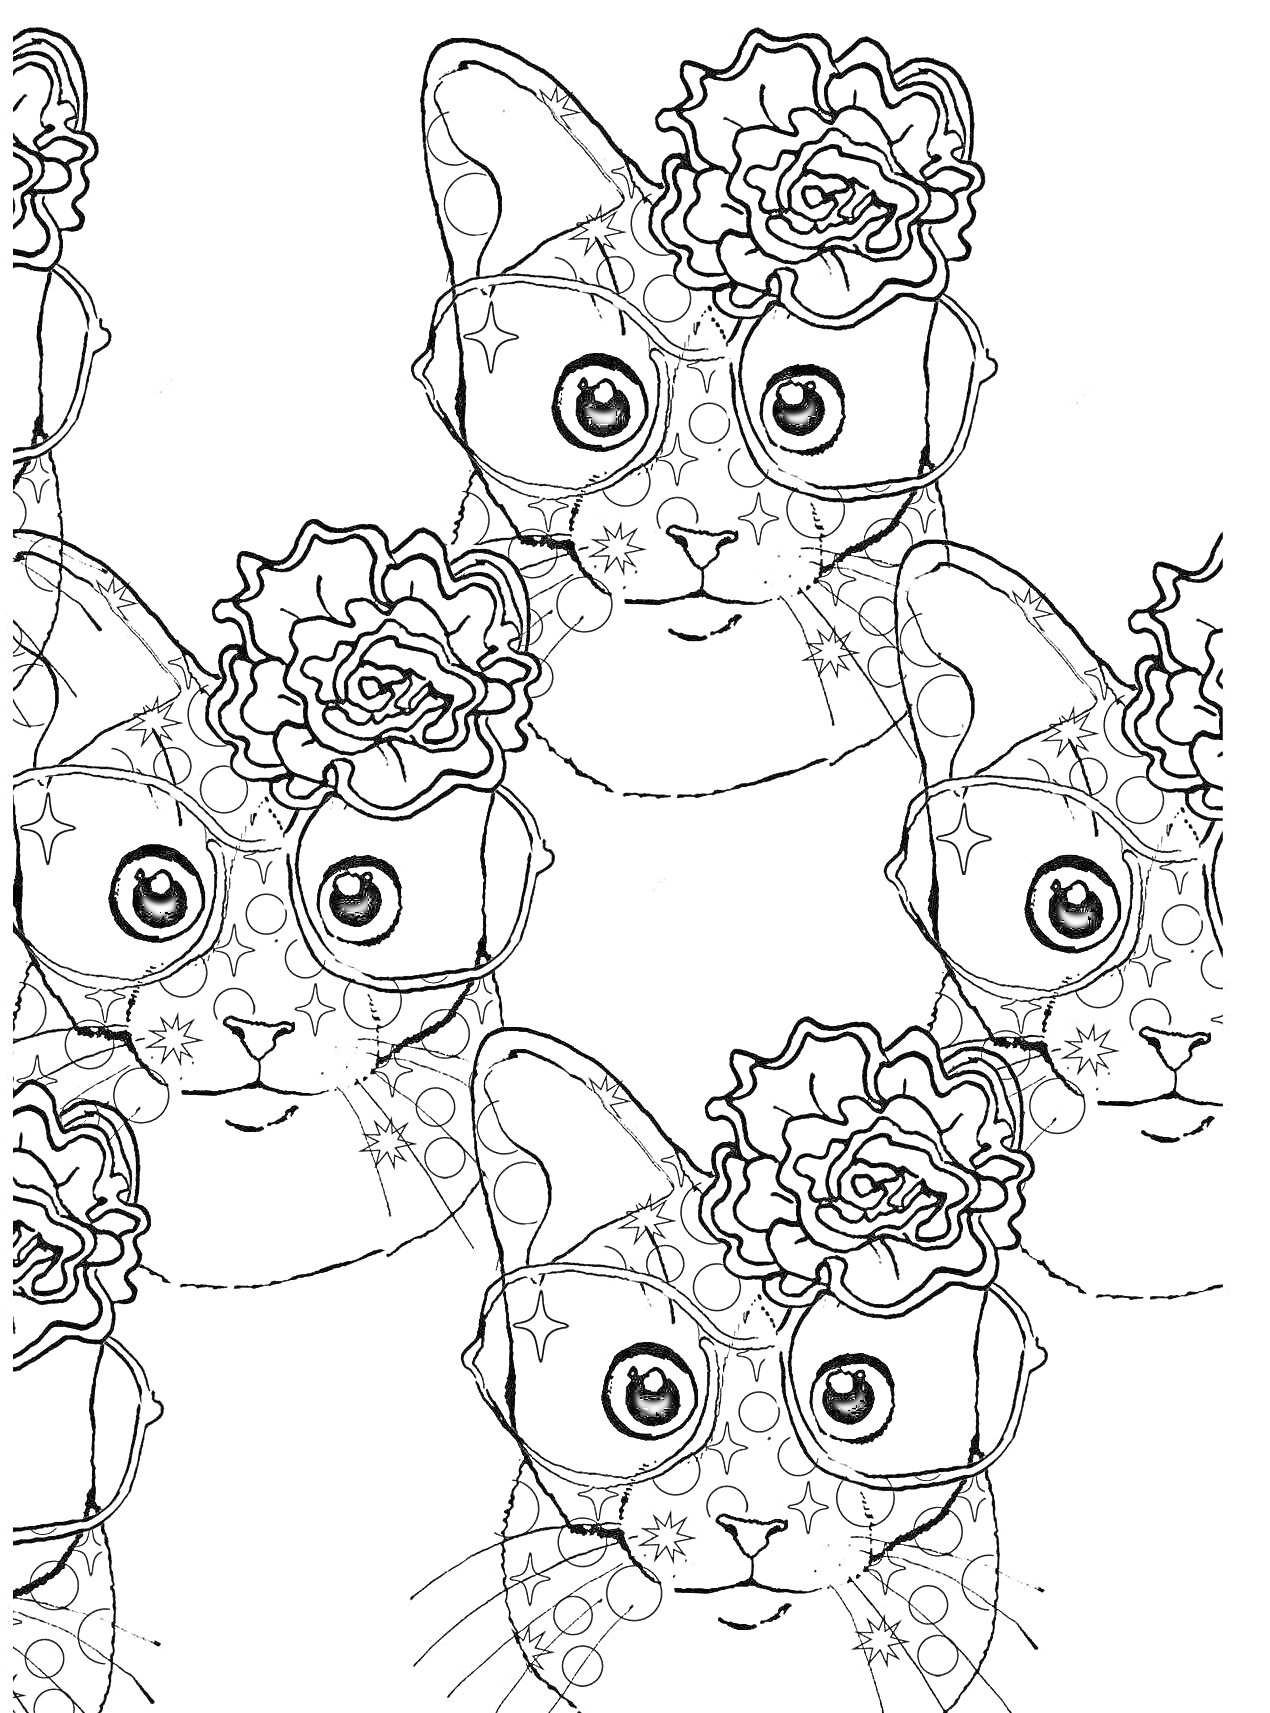 Кошки в очках с цветами на голове